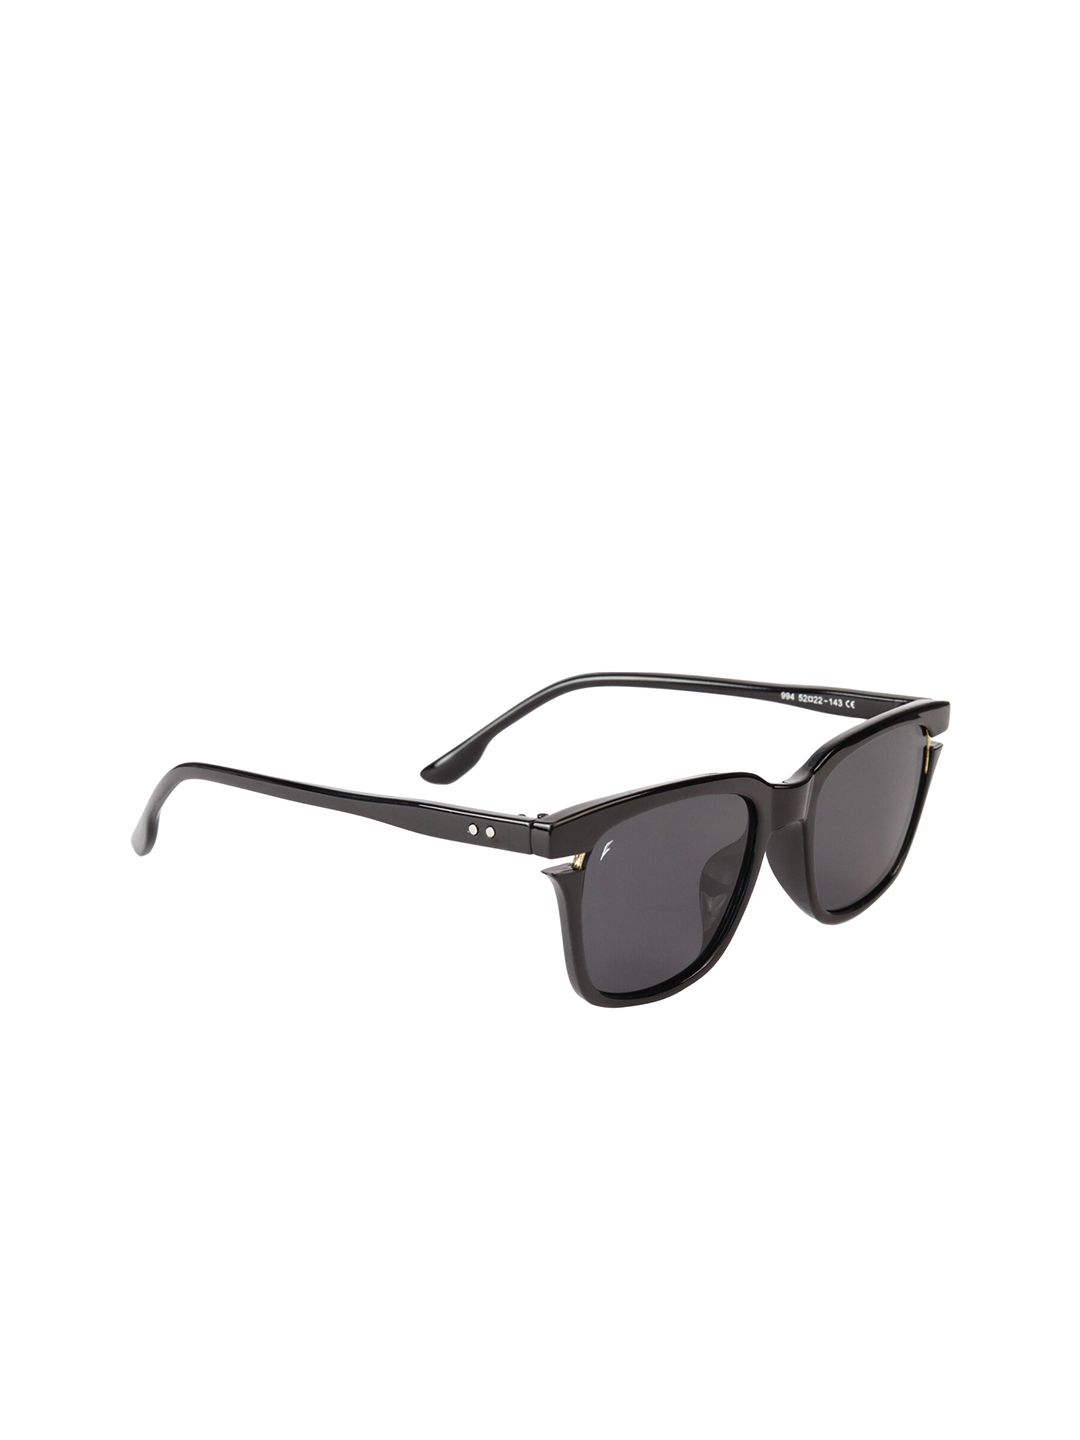 Floyd Unisex Black Lens & Black Square Sunglasses with UV Protected Lens 994_Blk_Blk-Black Price in India